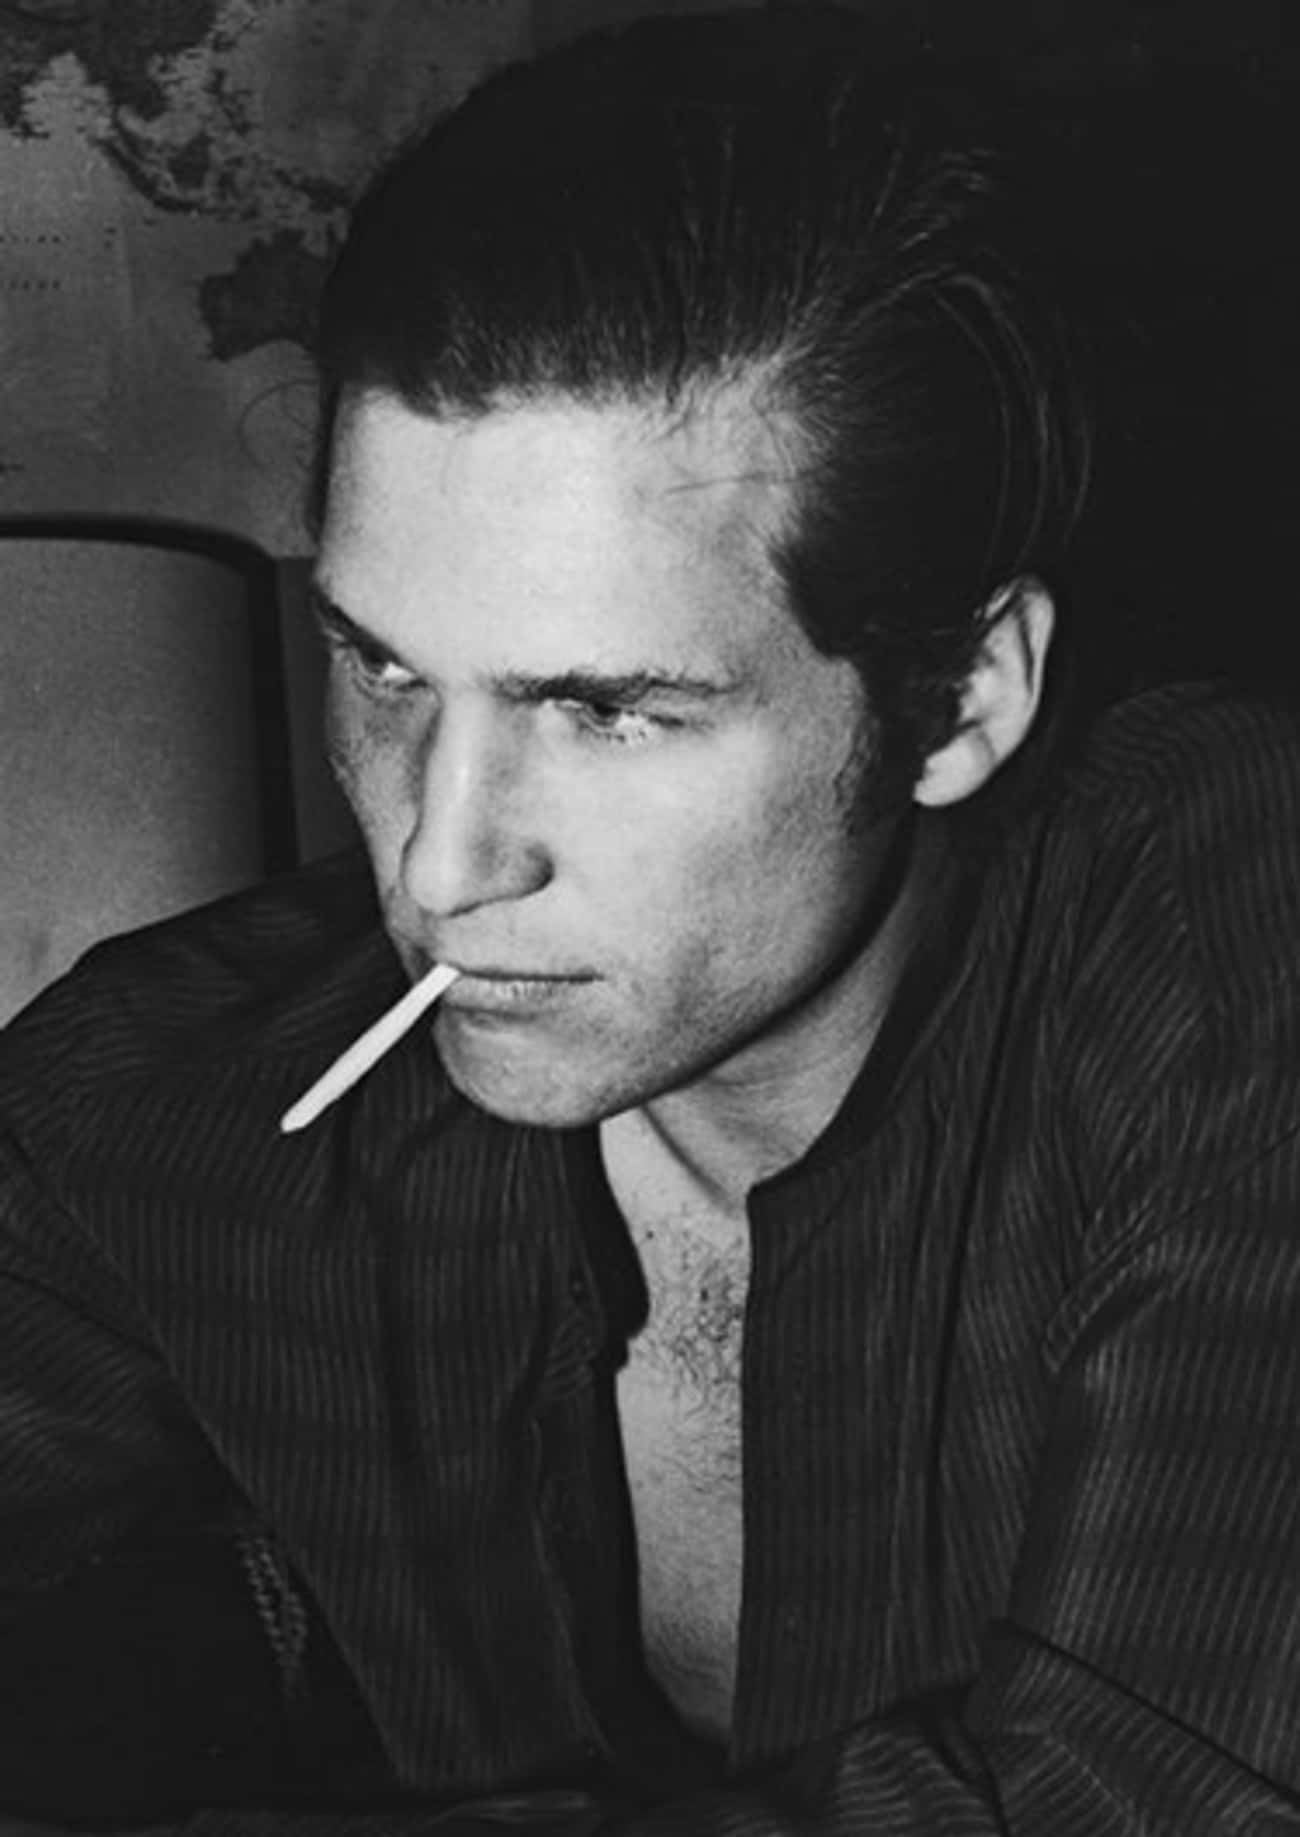 Young Jeff Bridges Smoking a Cigarette